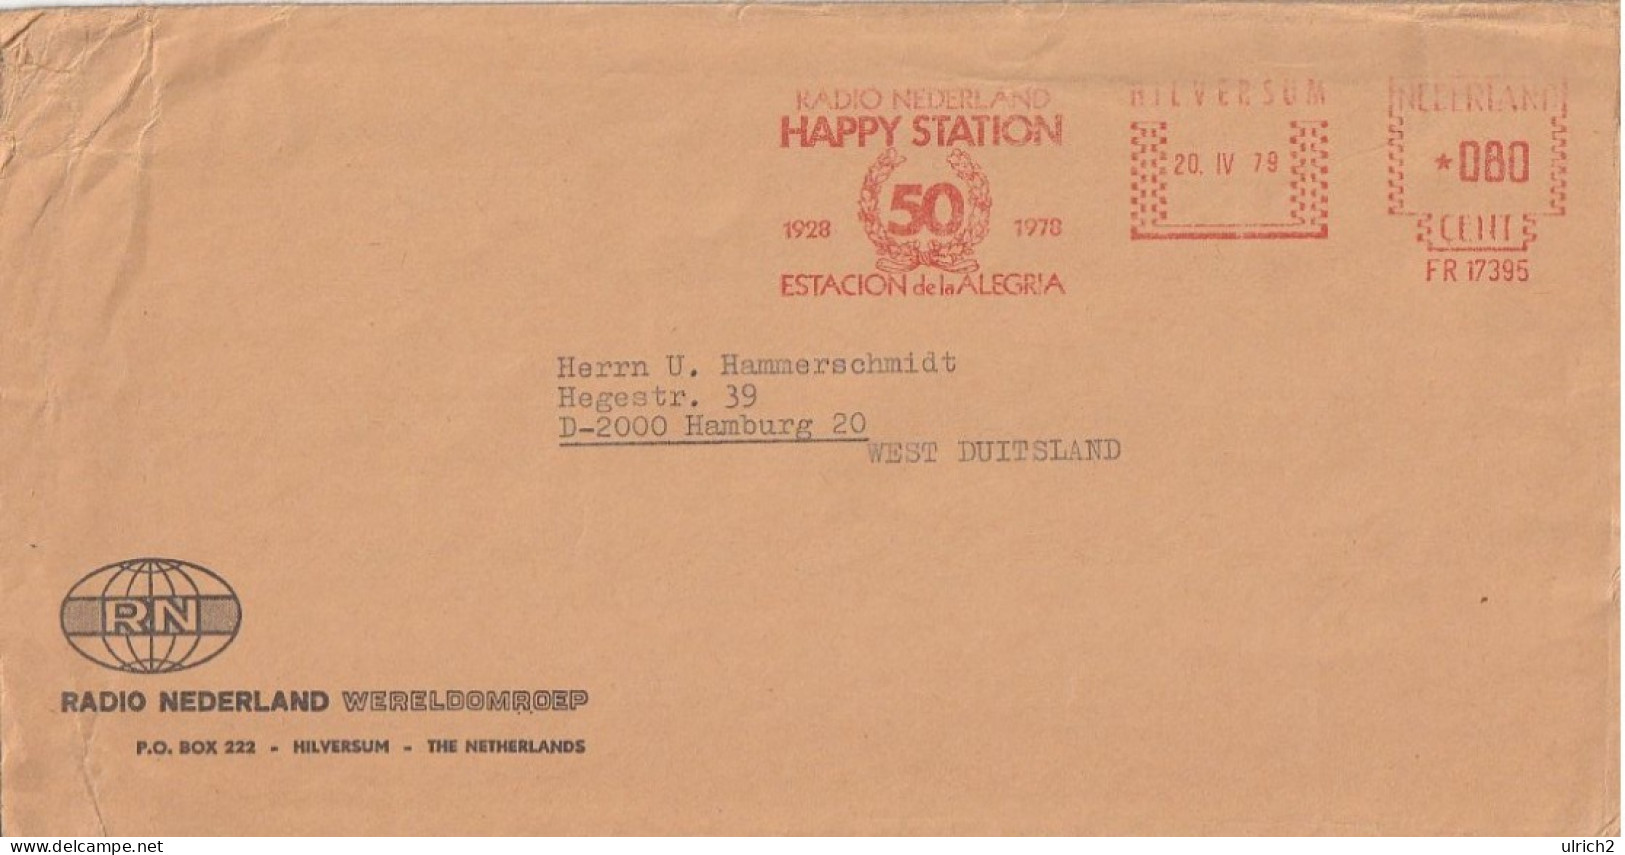 Netherlands - Radio Nederland Happy Station 50 Years - 1979 (67147) - Lettres & Documents